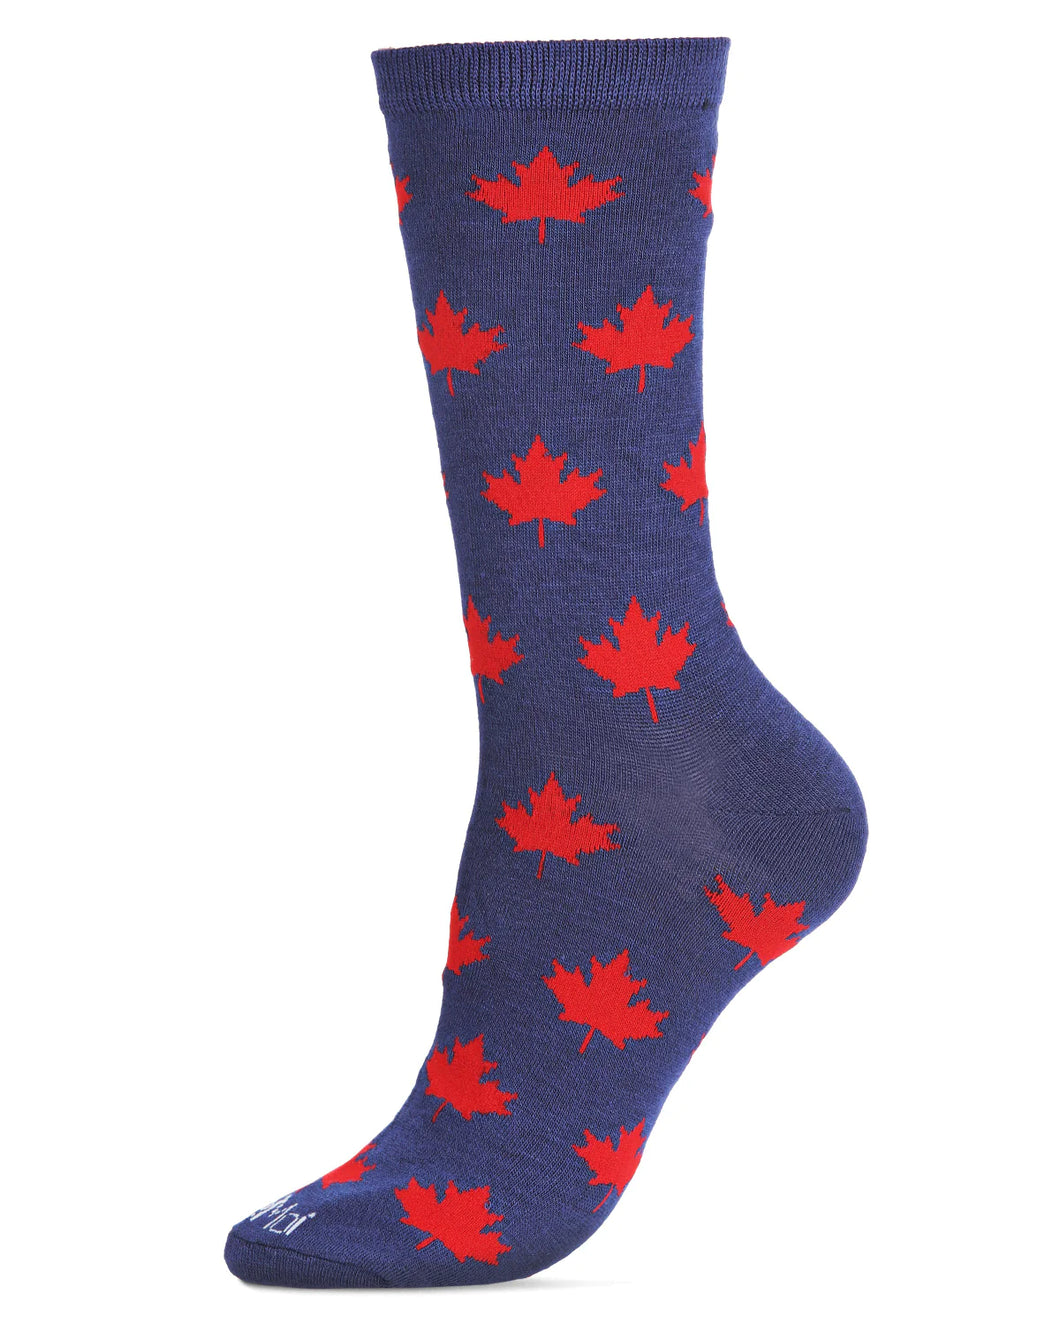 Oh Canada Ladies Bamboo Socks